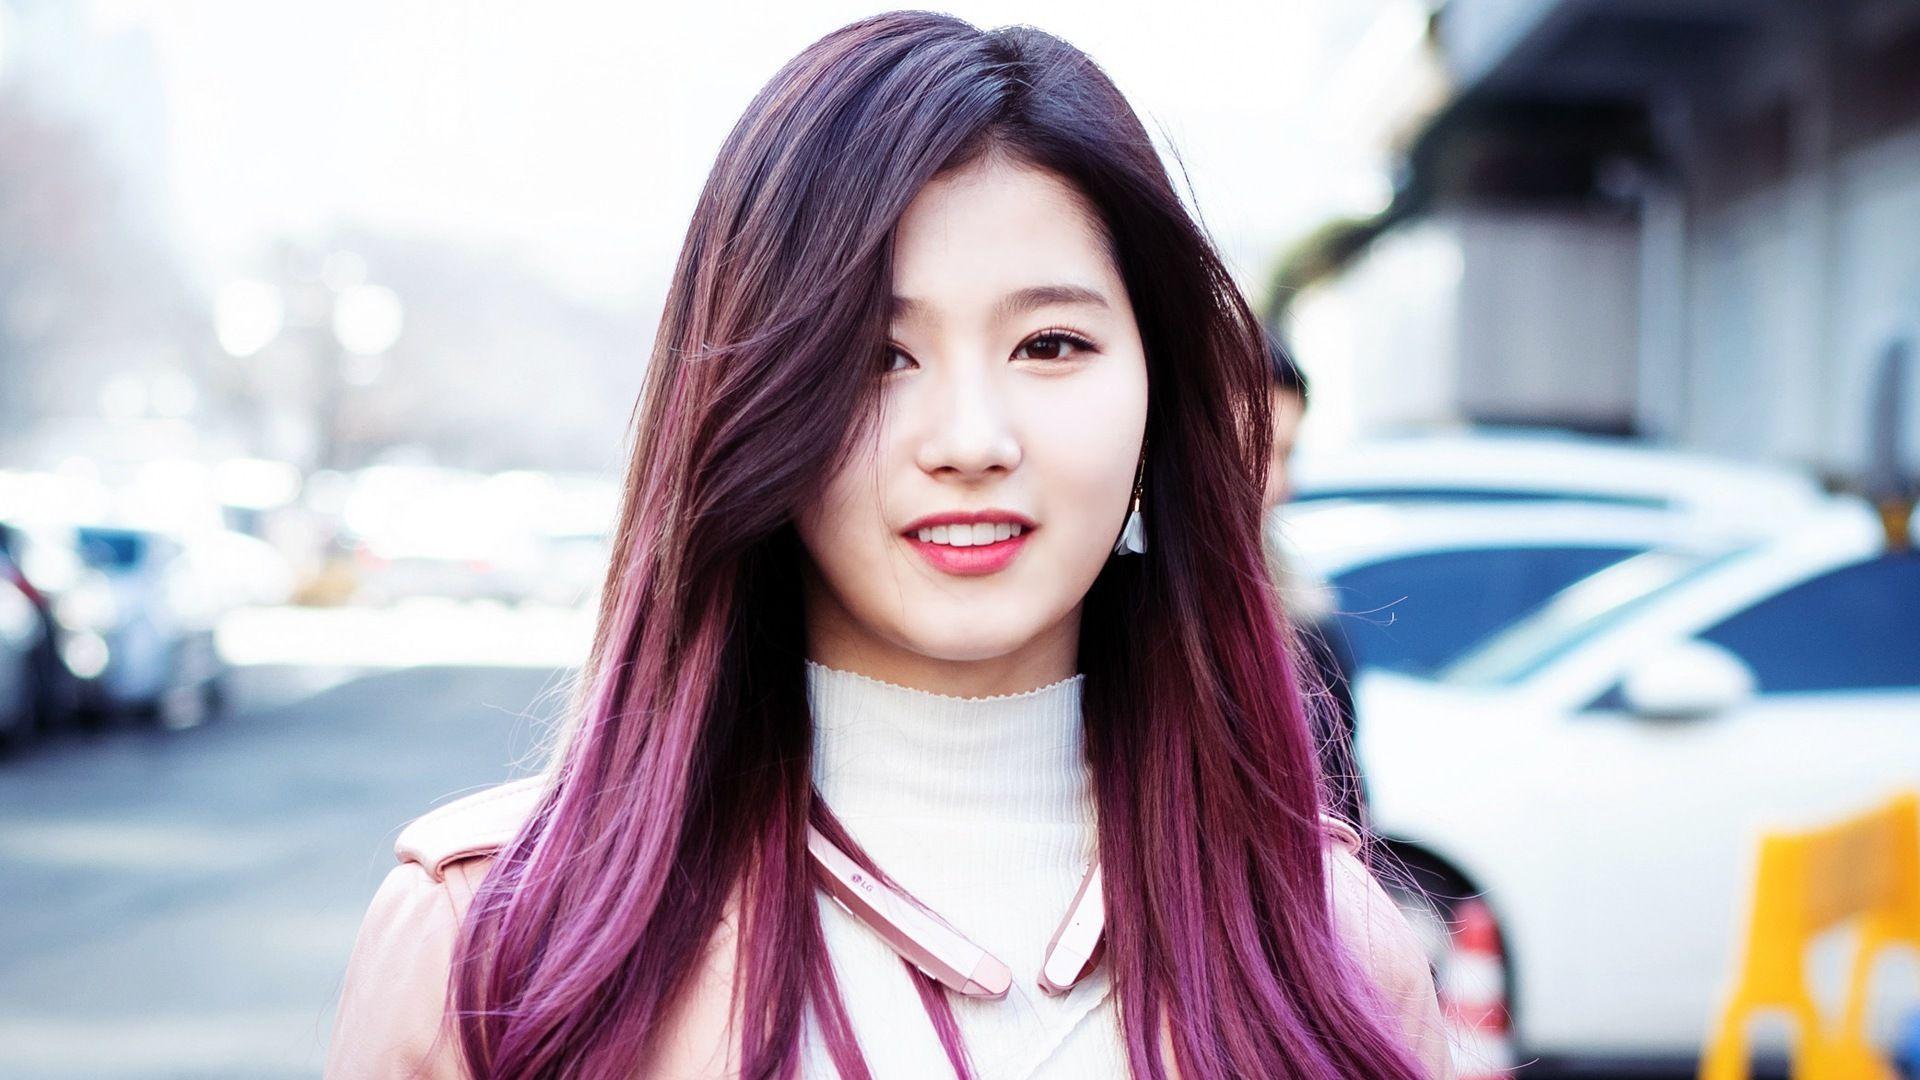 Sana Purple Hair TWICE K Pop Girl Wallpaper. Hair In 2019